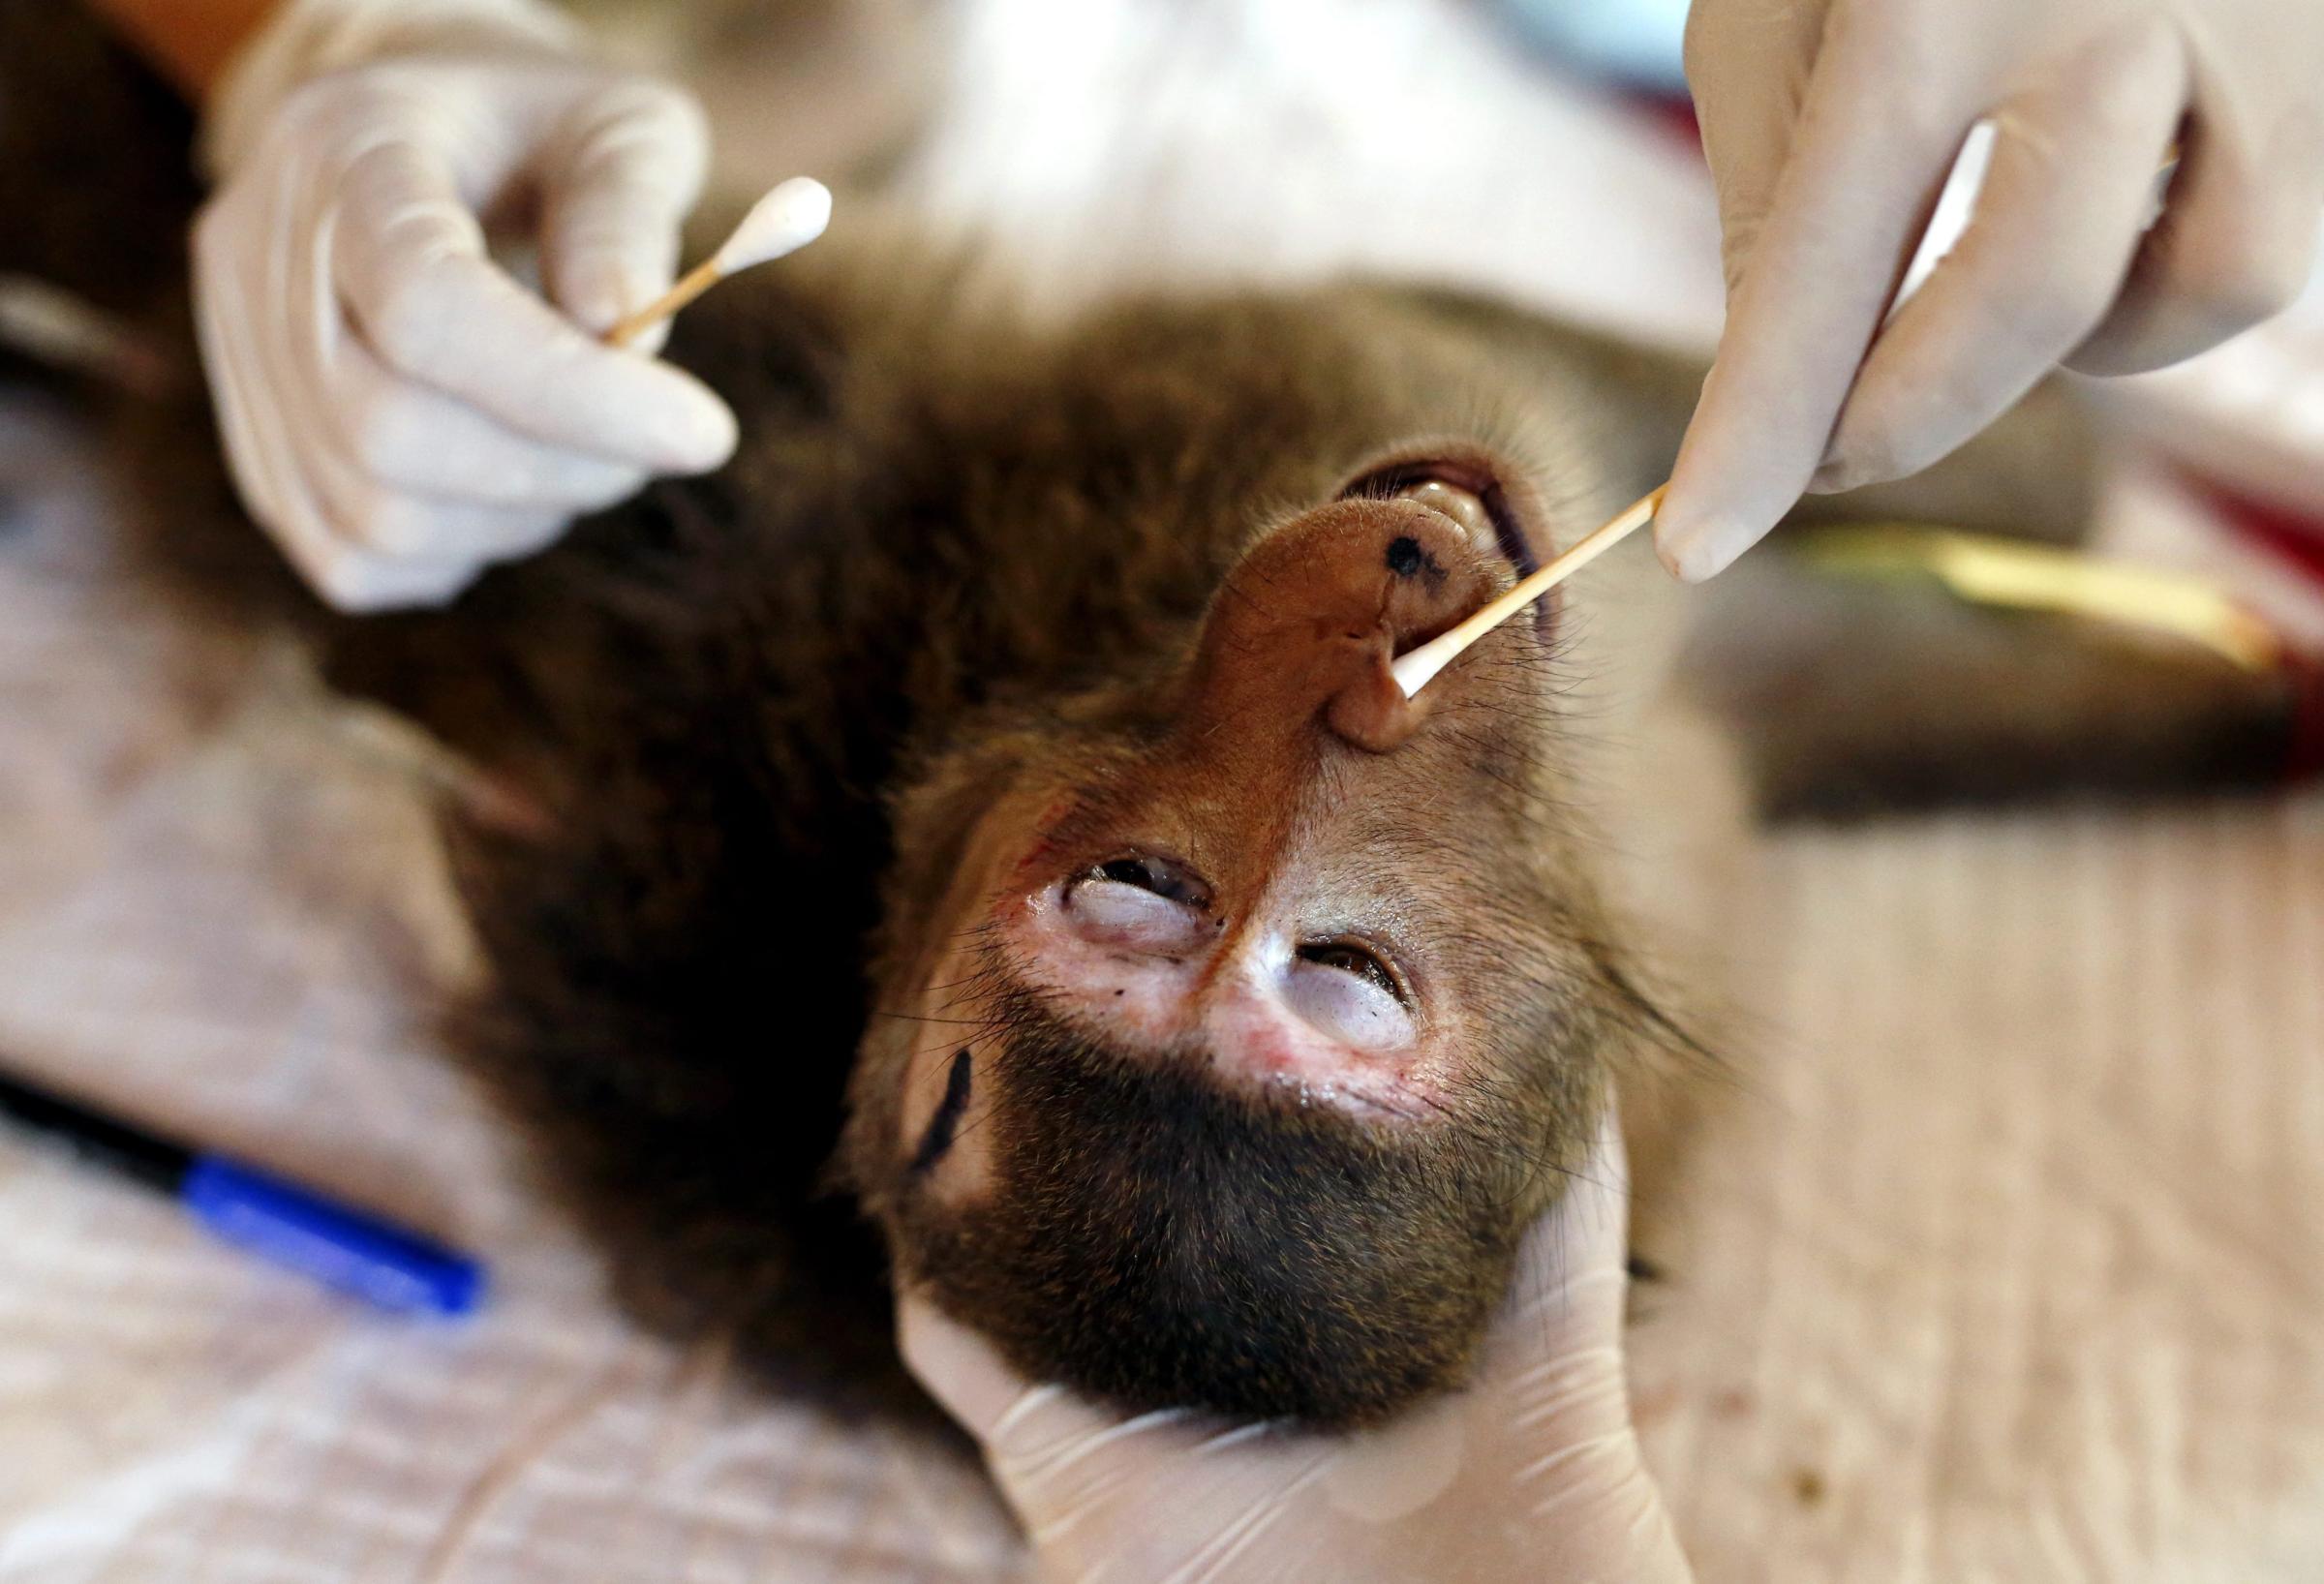 A Thai veterinarian takes a DNA sample from an unconscious wild monkey during a wild monkey health treatment program at Phra Nakhon Khiri Historical Park in Phetchaburi province, Thailand, on April 5, 2016.